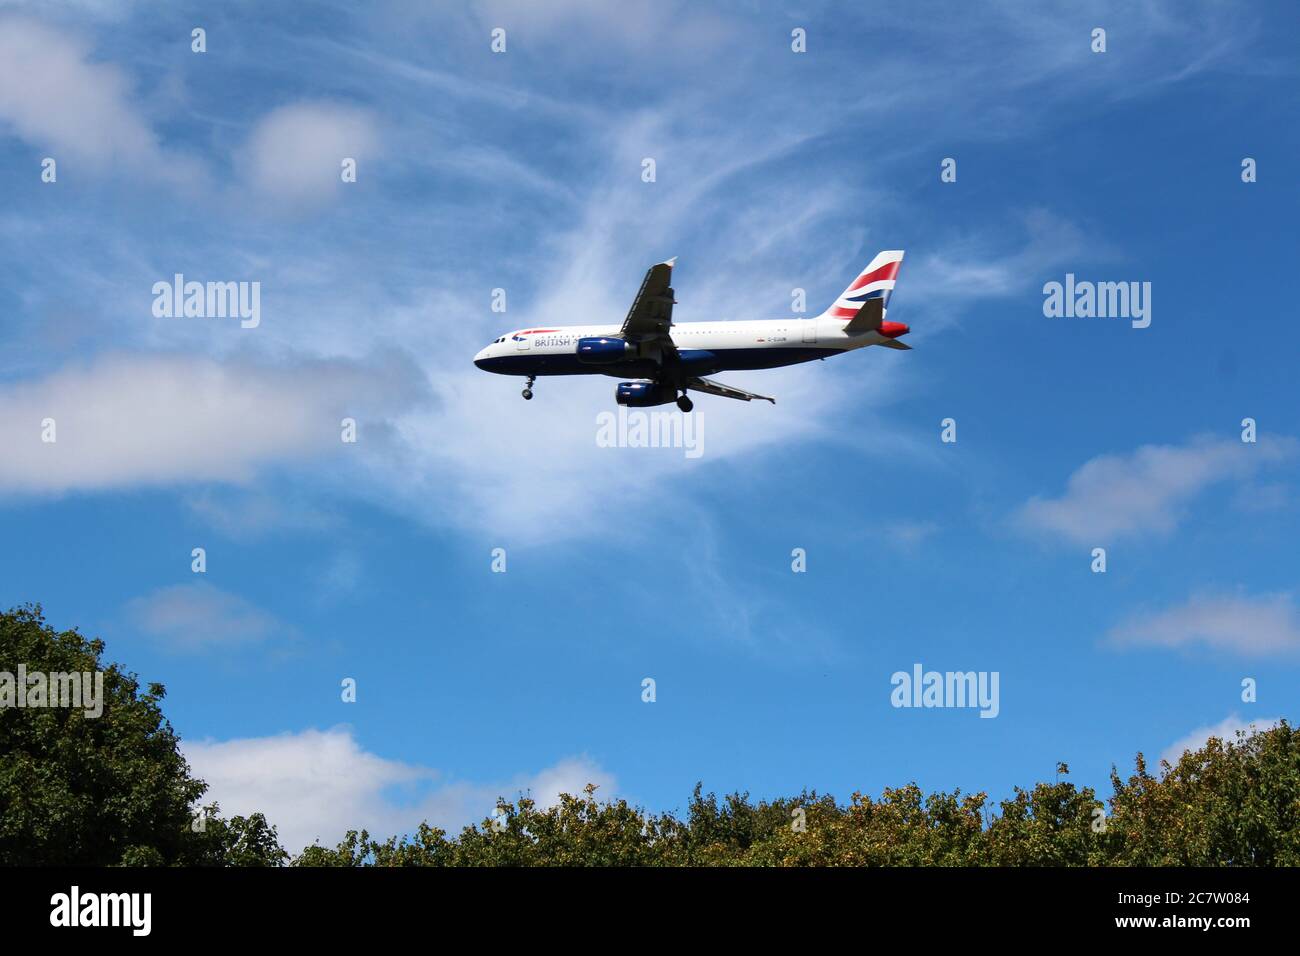 18/07/20 British Airways G-EUUN Airbus A320-232 Flight BA497 from Palma de Mallorca (PMI) to London Heathrow (LHR), descending as it prepares to land. Stock Photo